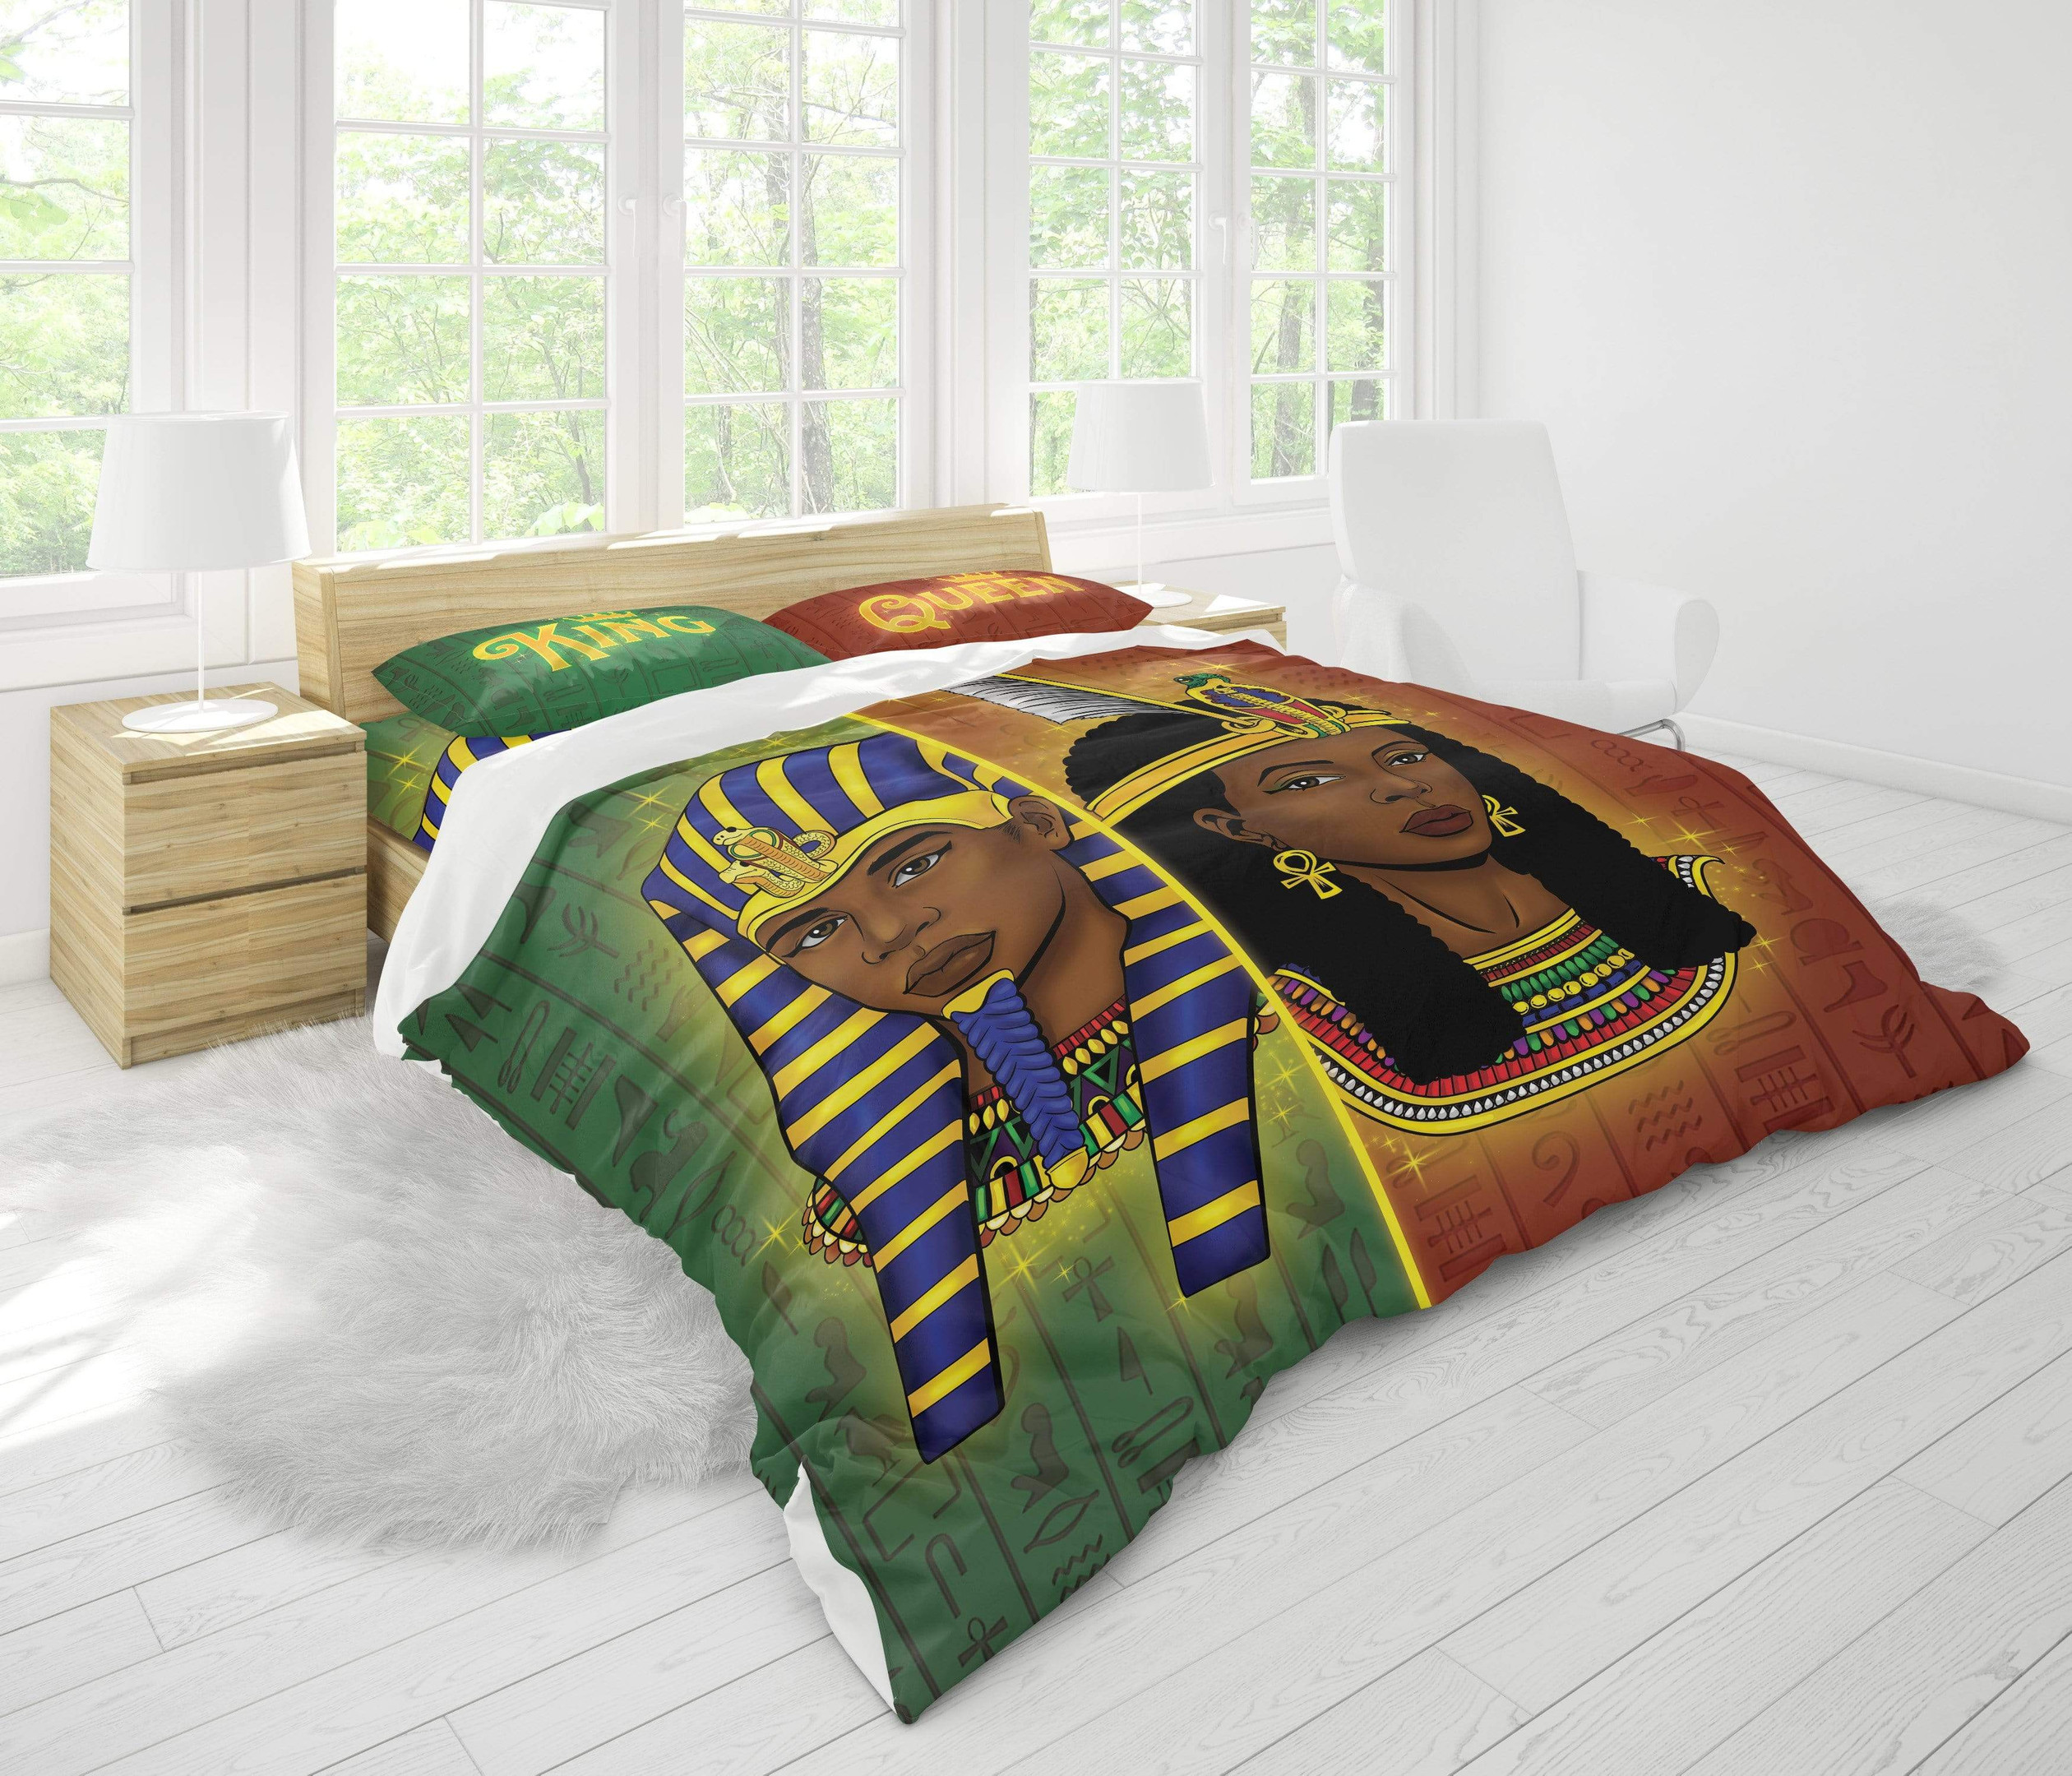 Black King & Queen Cotton Bed Sheets Spread Comforter Duvet Cover Bedding Sets